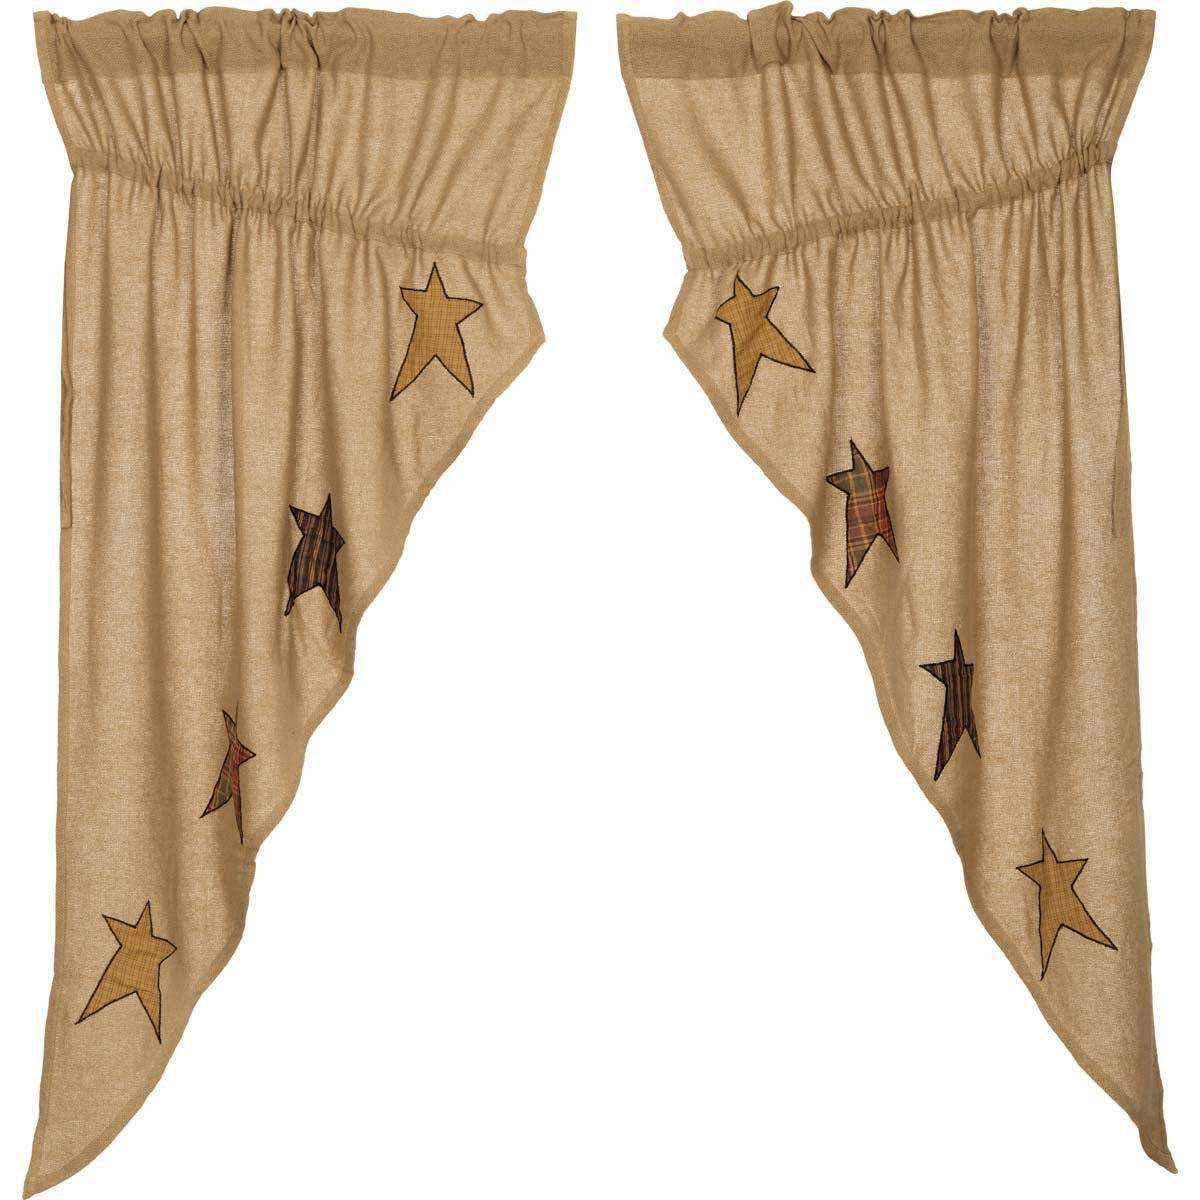 Stratton Burlap Applique Star Prairie Short Panel Curtain Set of 2 - The Fox Decor